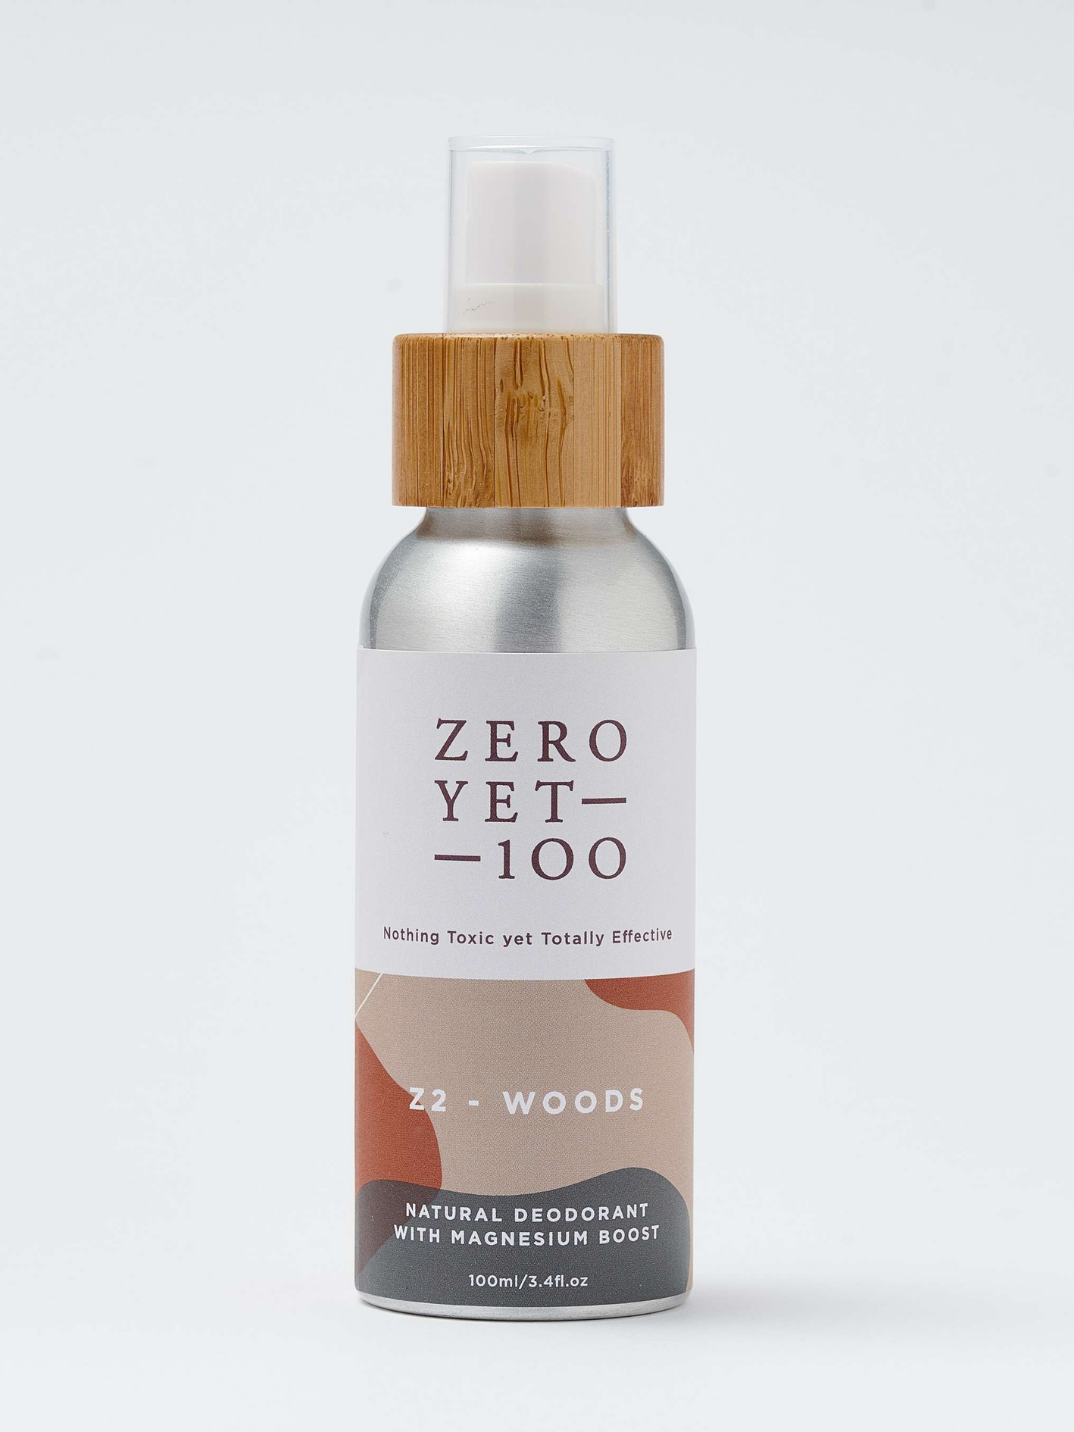 Z2 Woods Deodorant Spray Zero Yet 100 plastic-free packaging ethical skincare